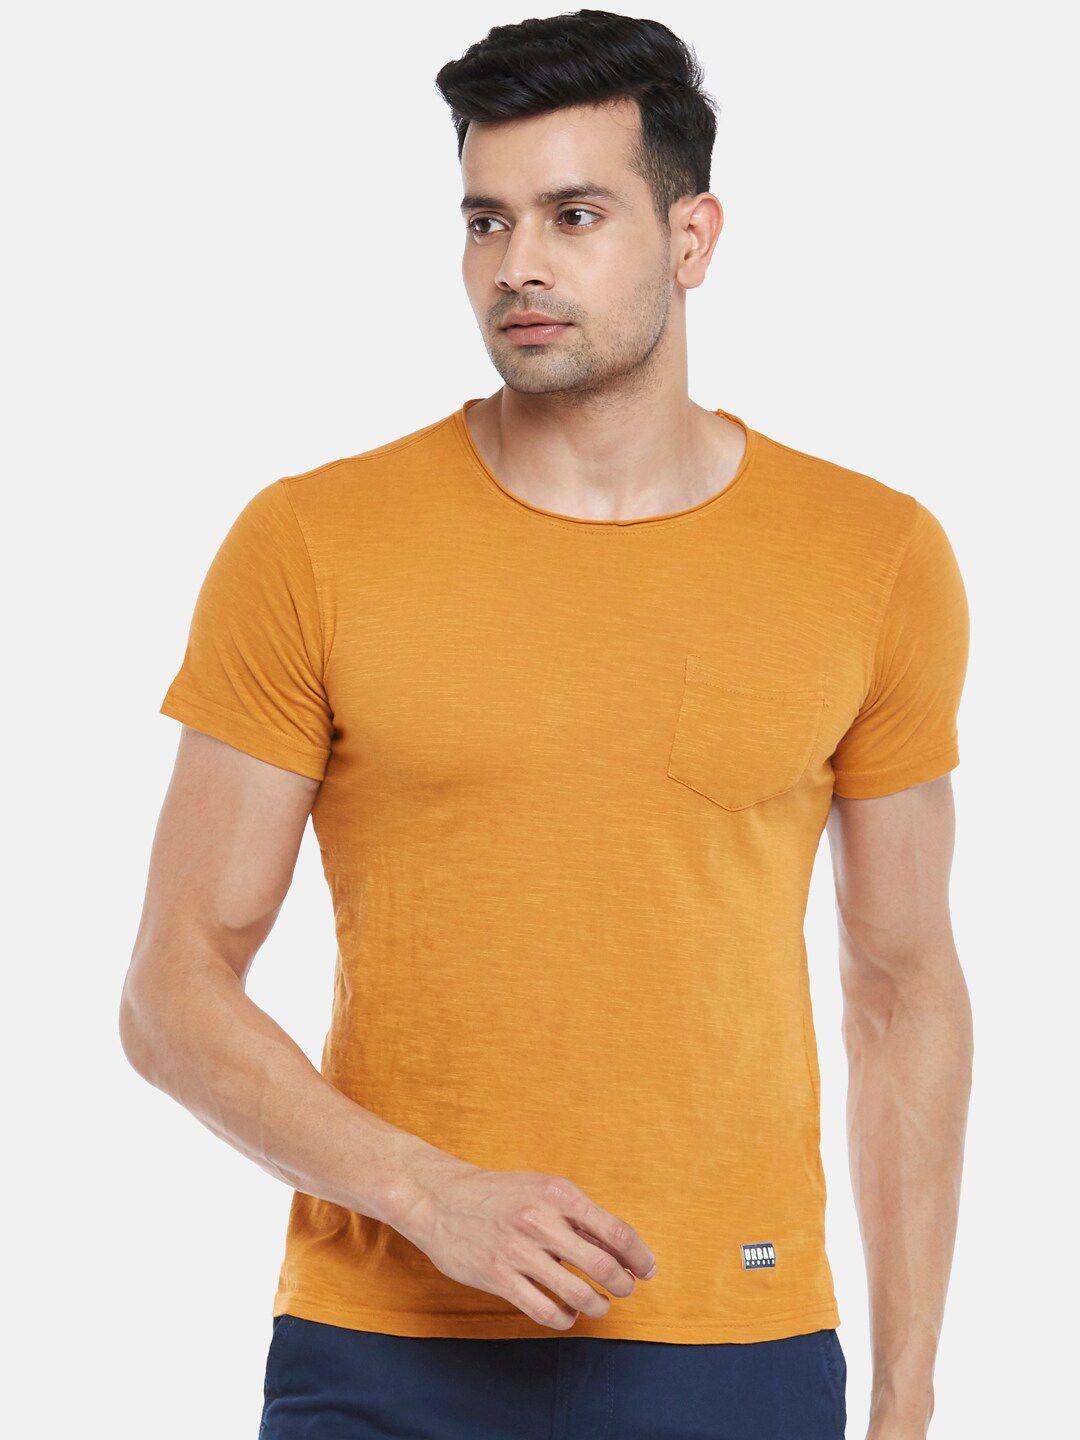 urban ranger by pantaloons men mustard yellow solid slim fit pure cotton t-shirt